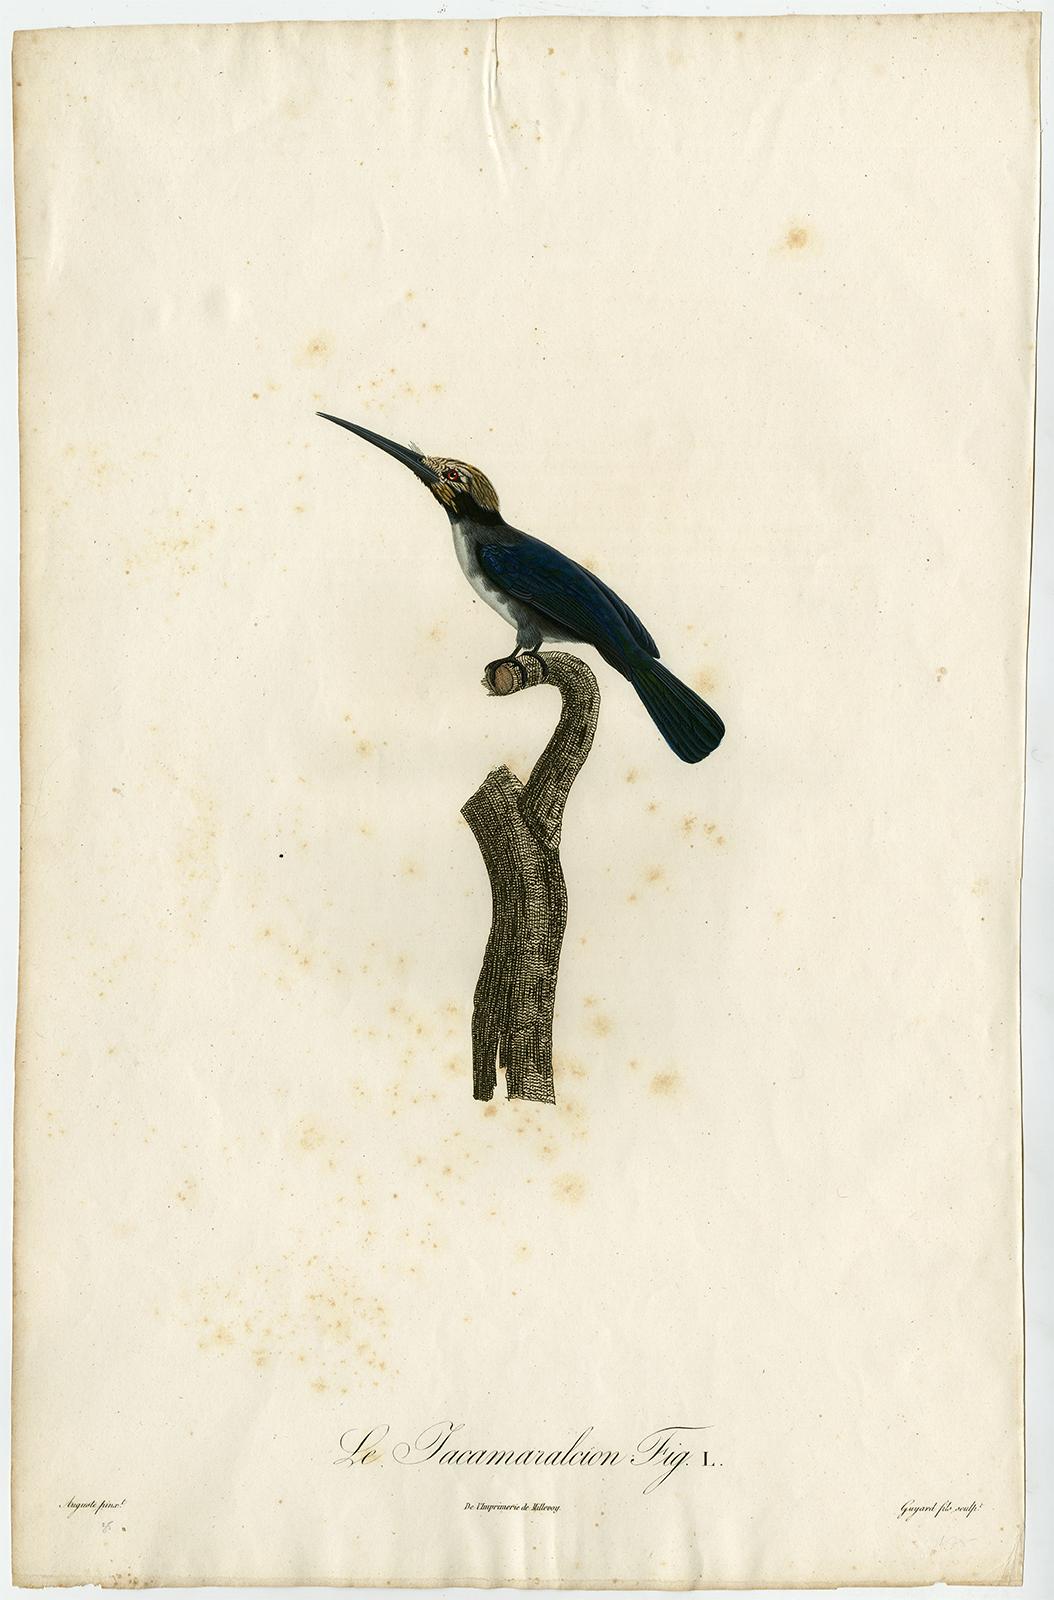 Jacques Barraband Animal Print - A Jacamar bird species by Barraband - Hand coloured etching - 19th century